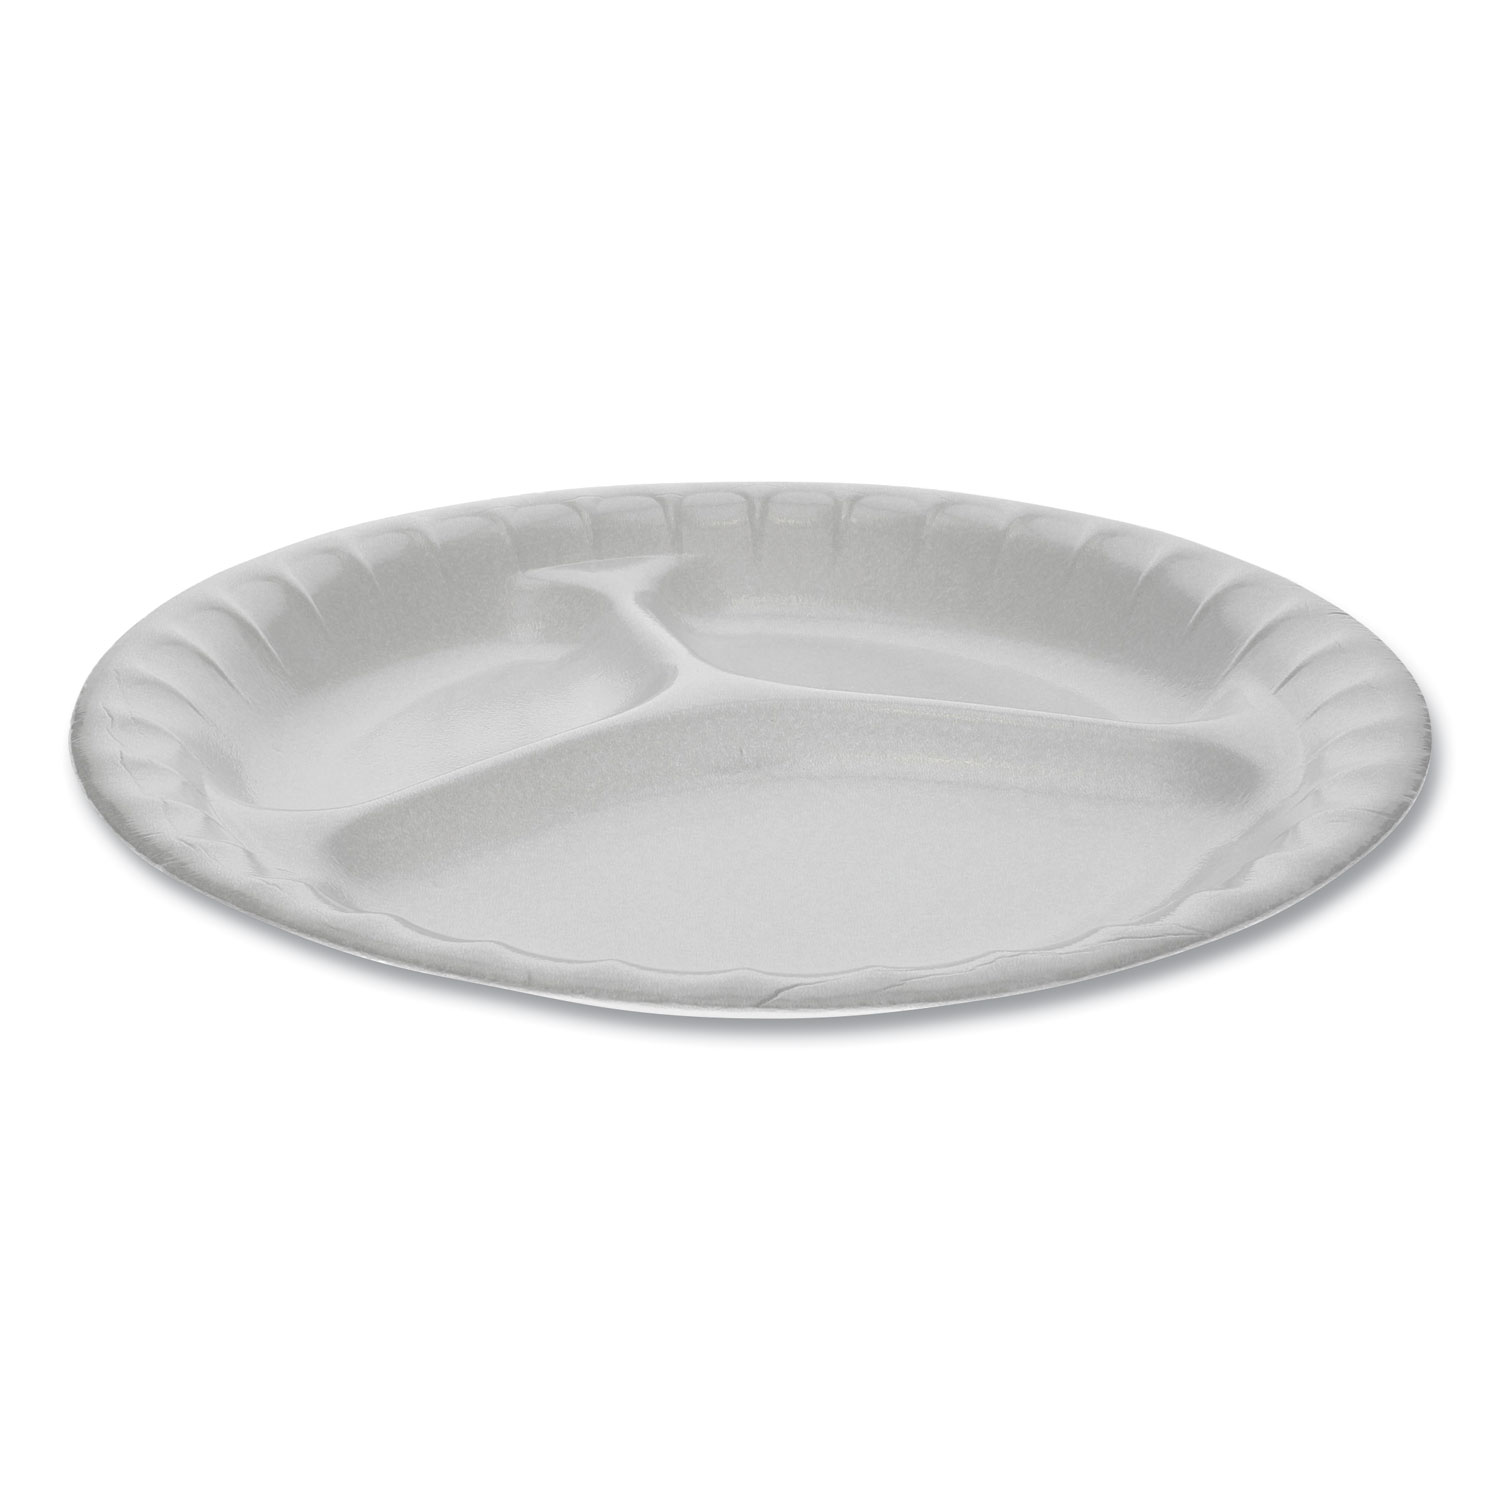 Pactiv Laminated Foam Dinnerware, 3-Compartment Plate, 8.88 Diameter, White, 500/Carton